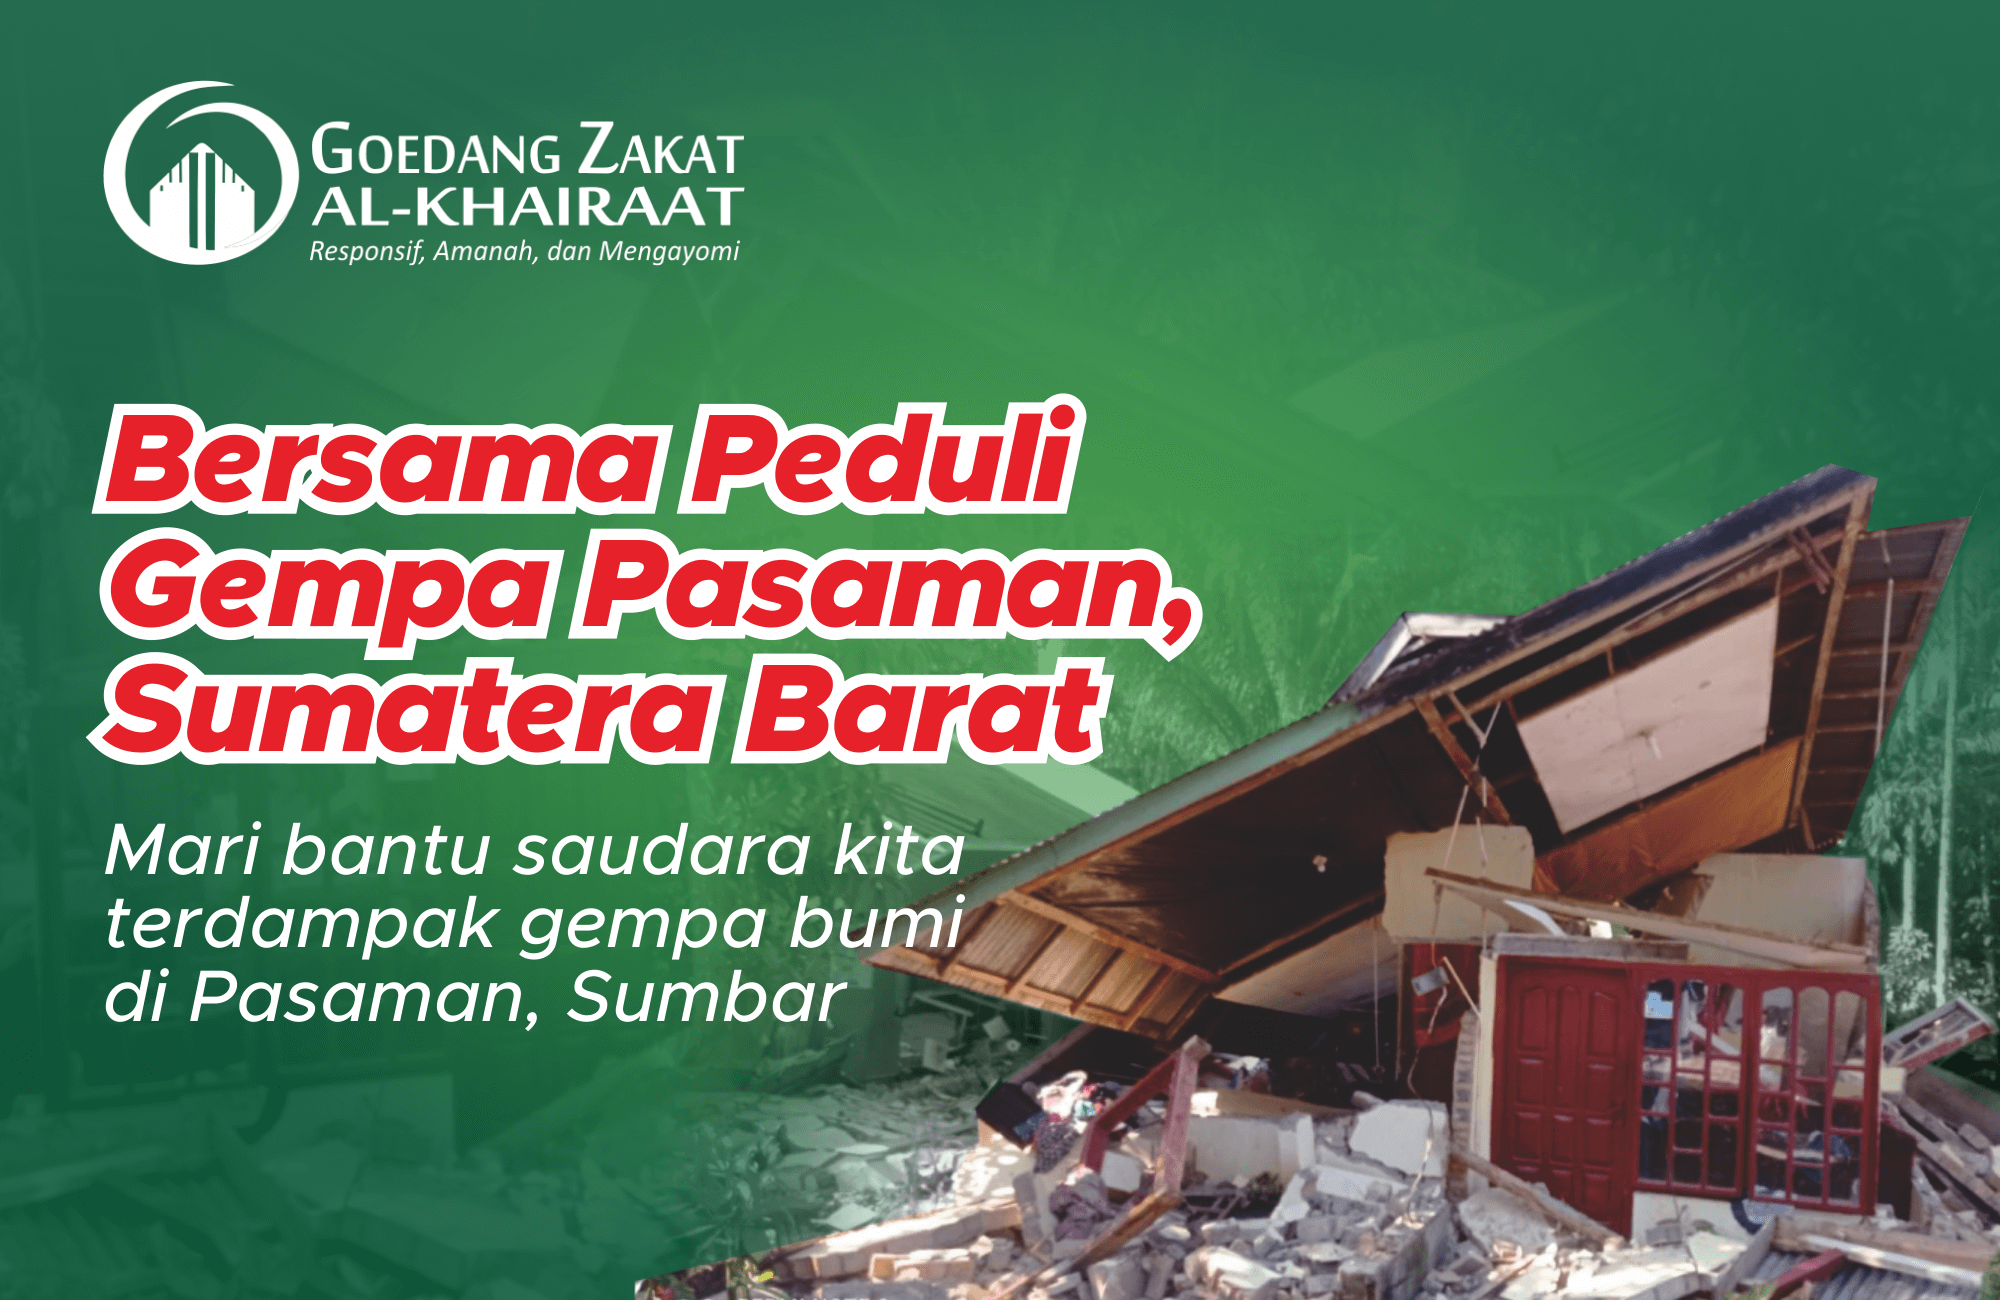 Peduli Gempa Pasaman, Sumatera Barat